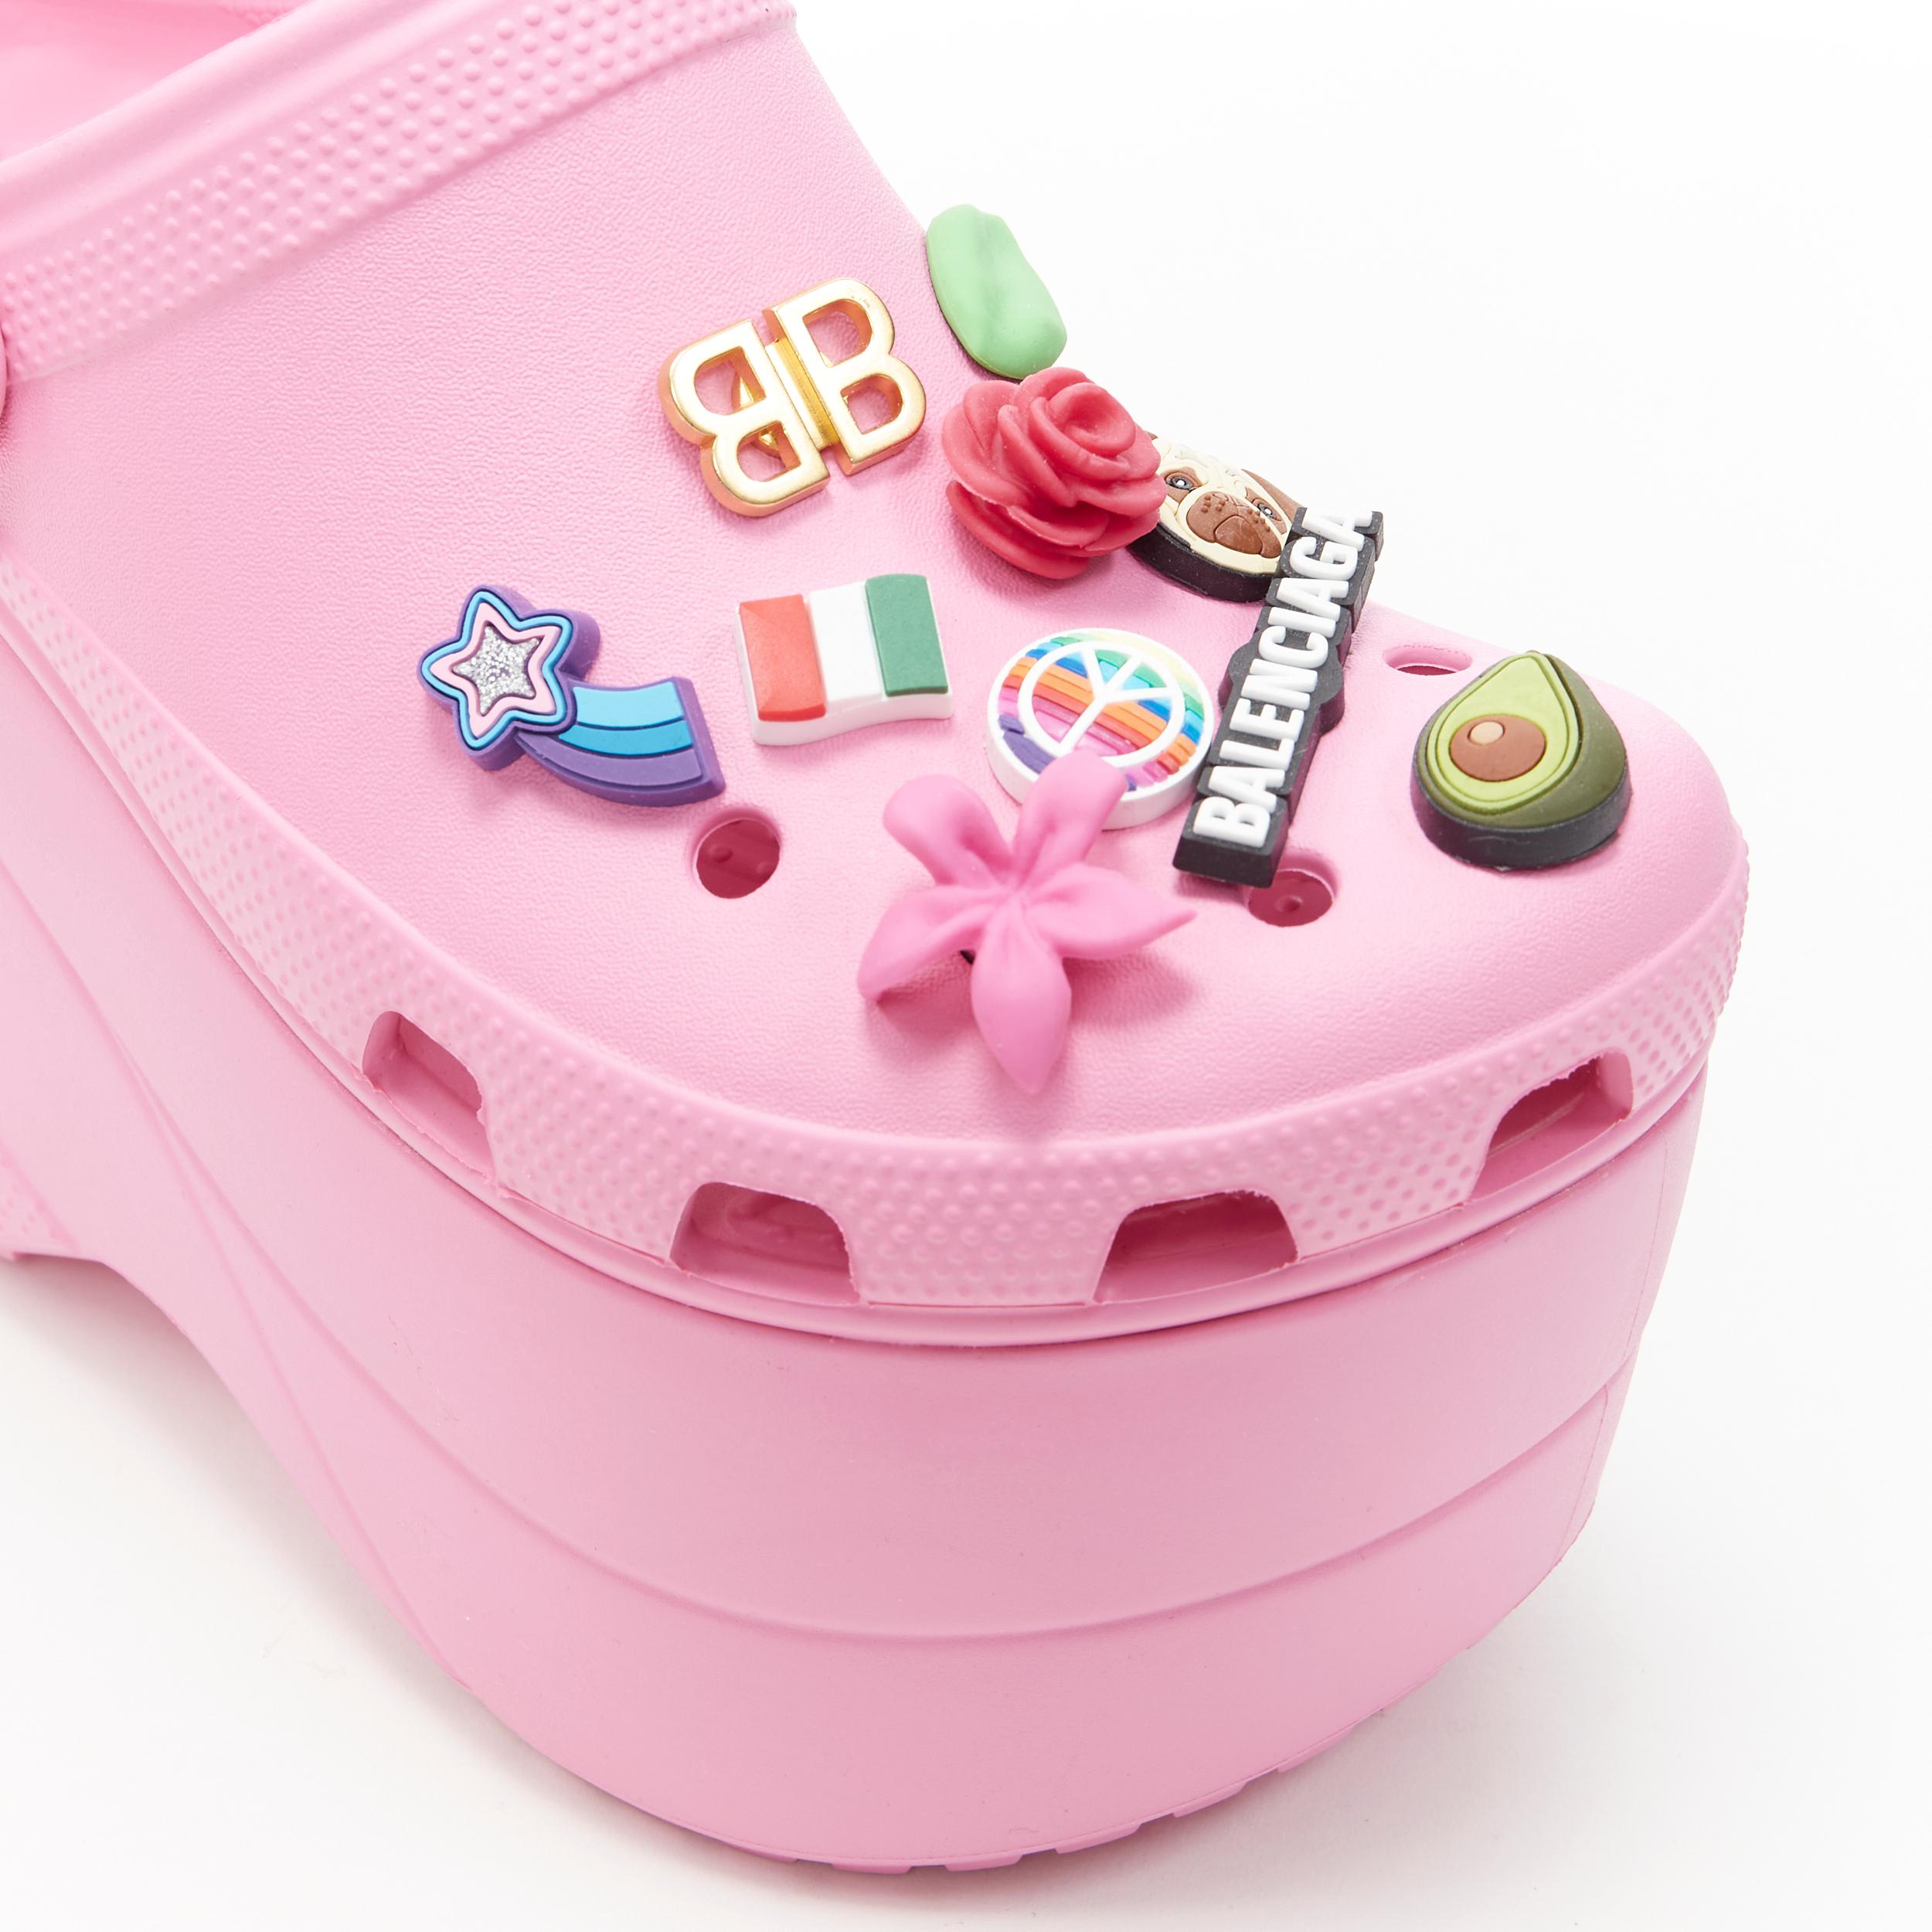 new BALENCIAGA CROCS 2018 Rose Bon Bon pink gibbet platform sandals EU35 
Reference: TGAS/B01582 
Brand: Balenciaga 
Designer: Demna Gvasalia 
Model: Platform Crocs 
Collection: Spring Summer 2018 Runway 
Material: Rubber
Color: Pink 
Pattern: Solid